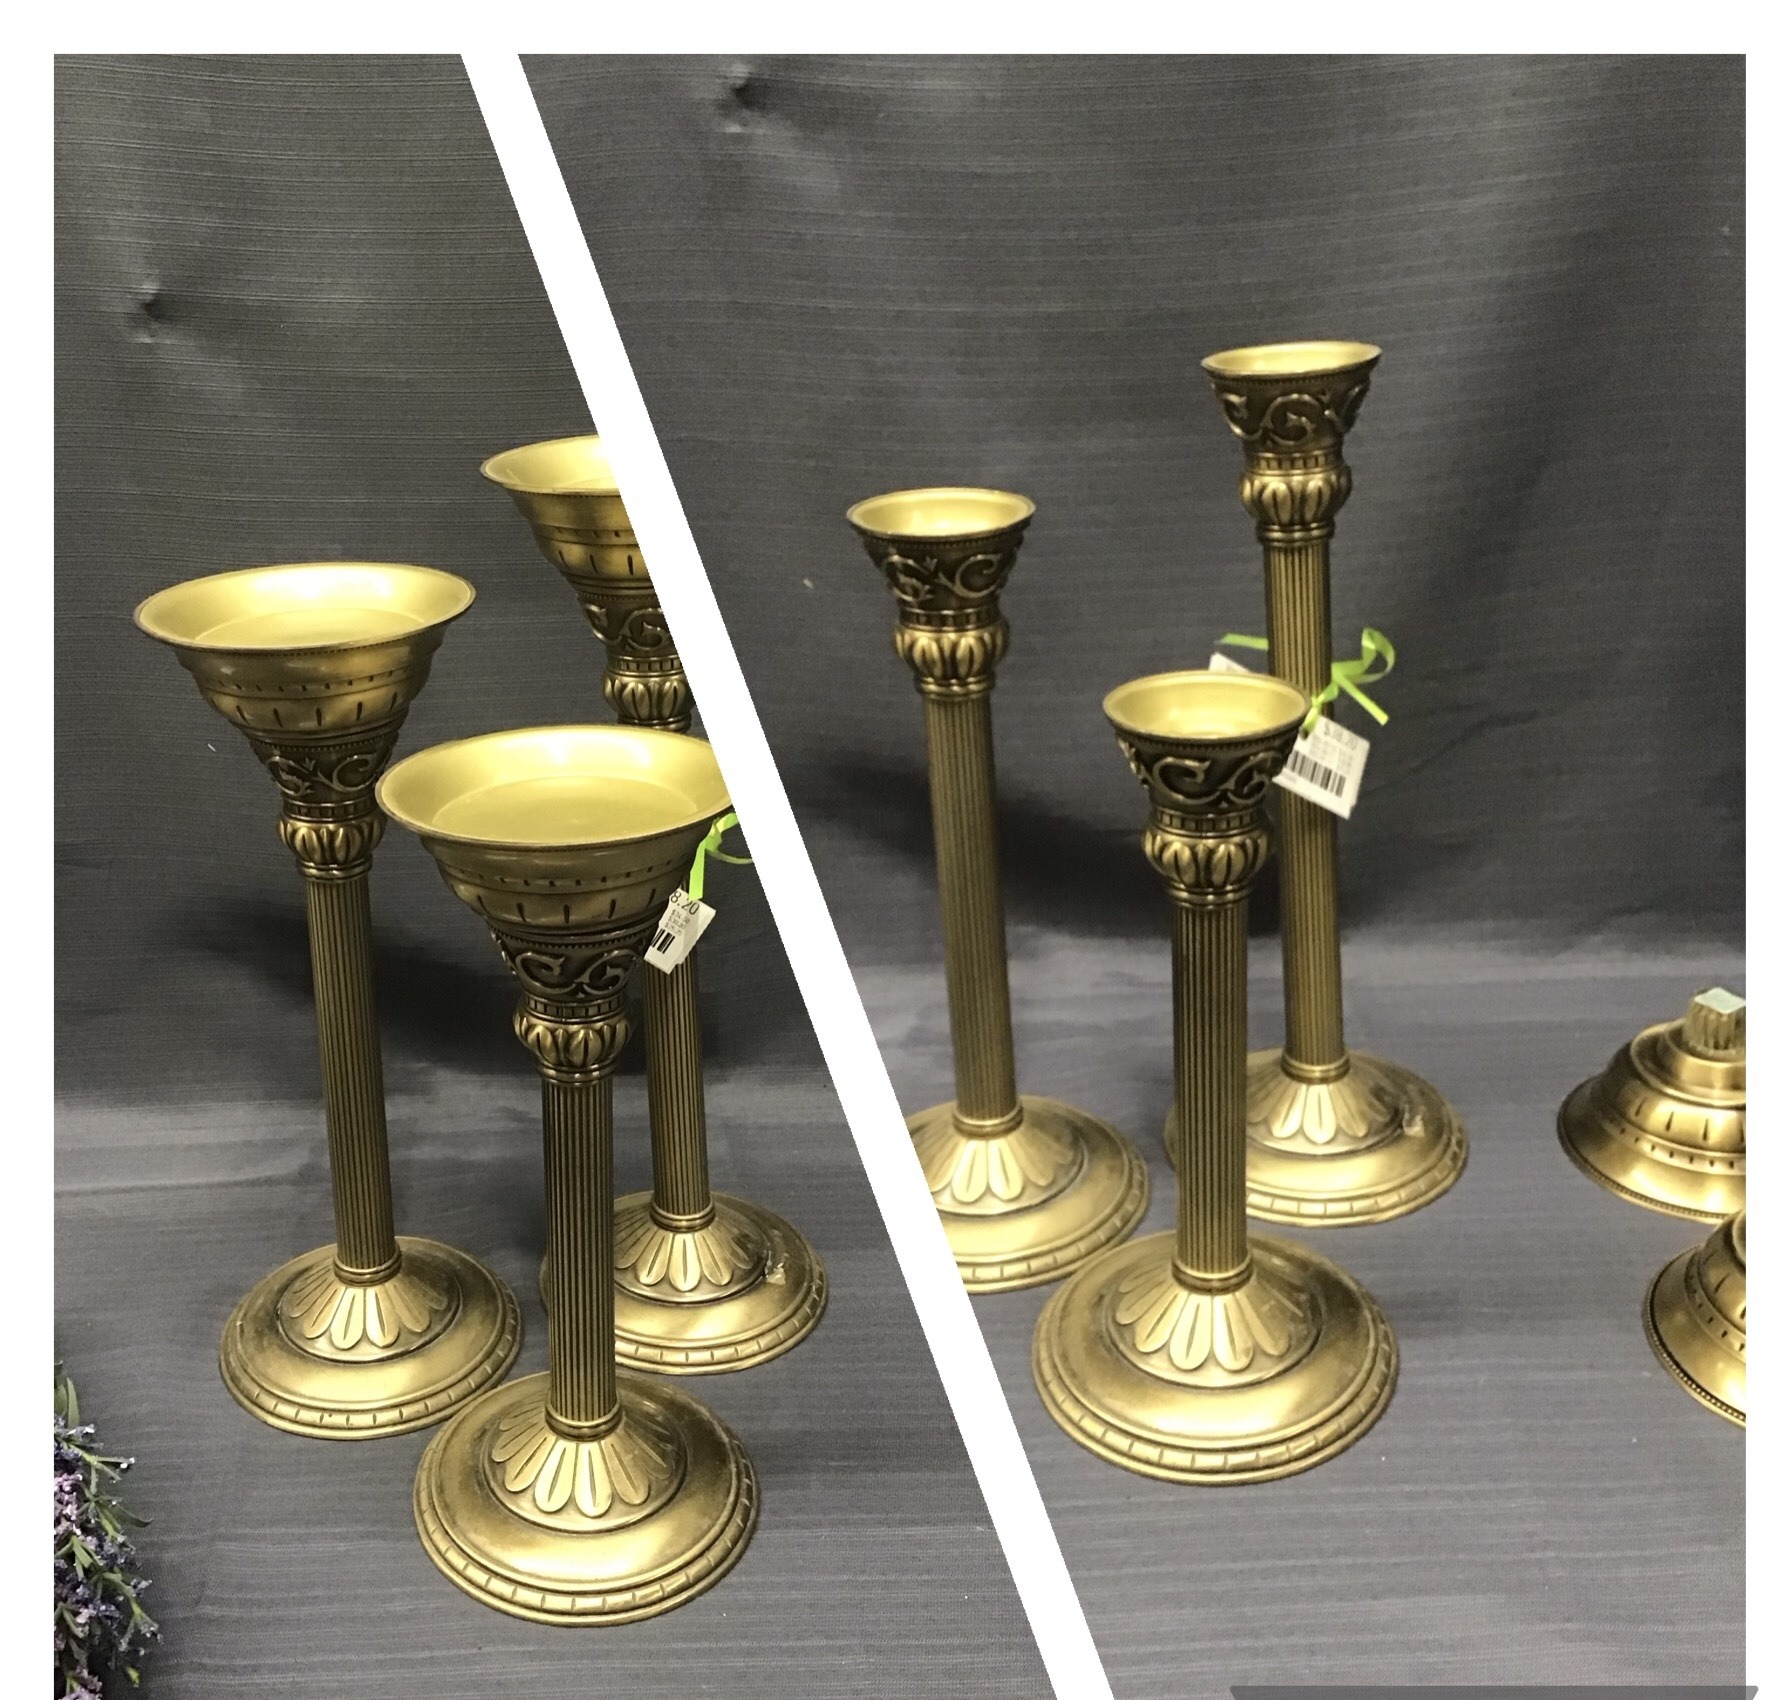 Versatile Brass Candlestick Holders Set of 3